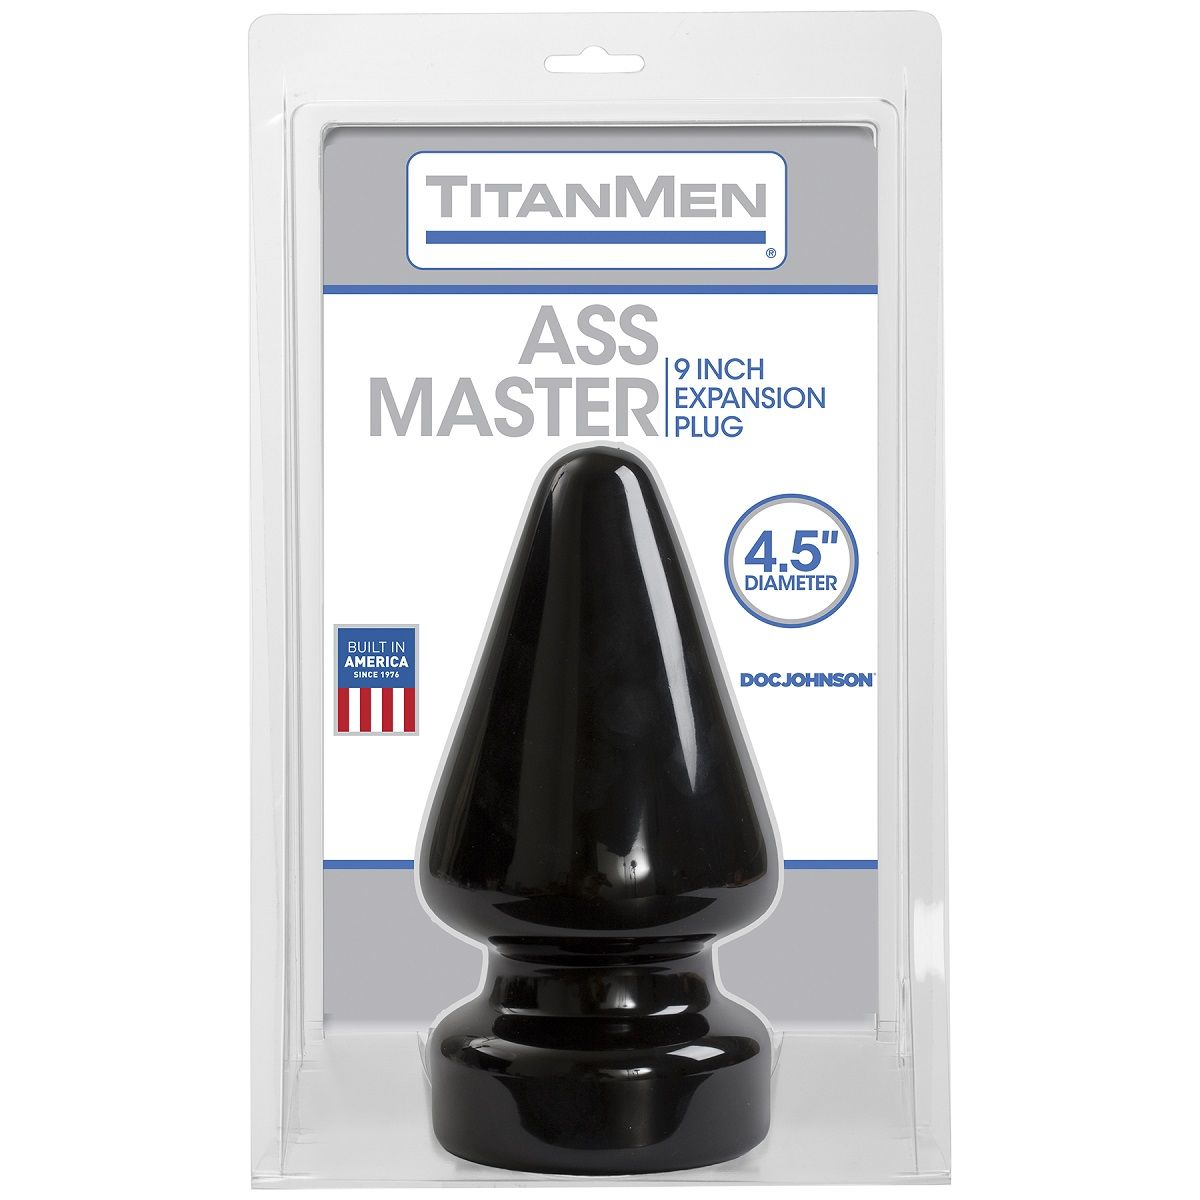 Огромный плаг Titanmen Tools Butt Plug 4.5  Diameter Ass Master - 23,1 см.